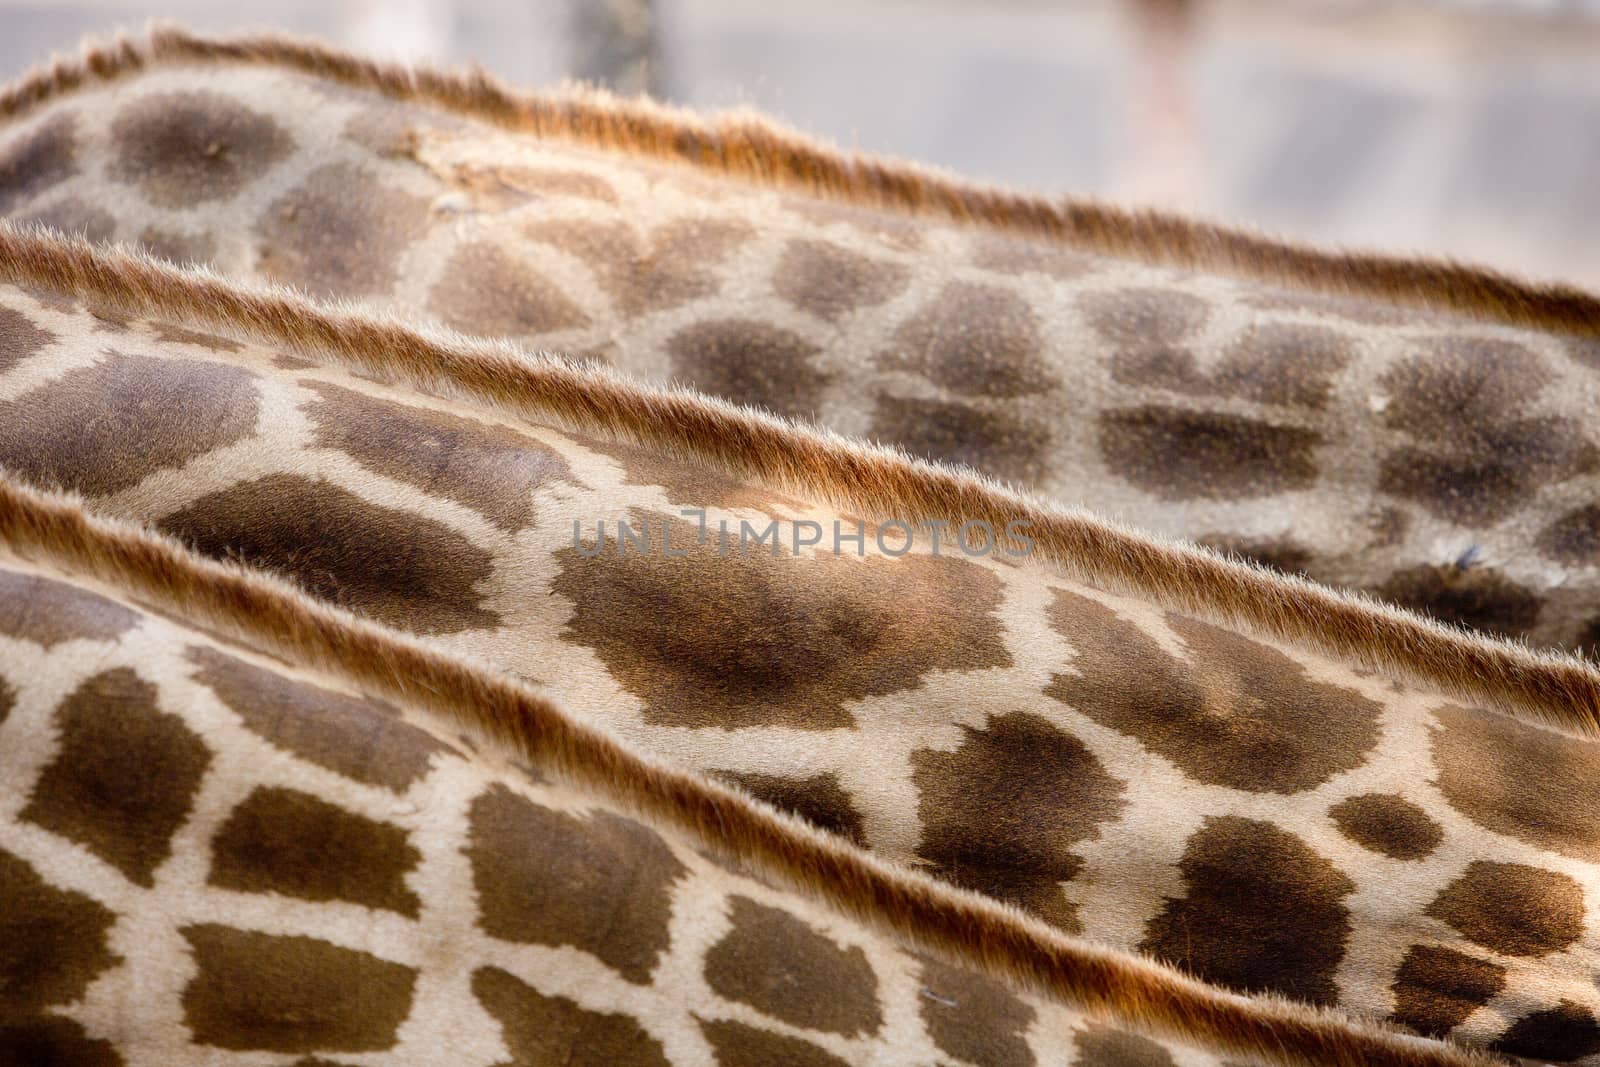 Skin and feather Giraffe. by jayzynism